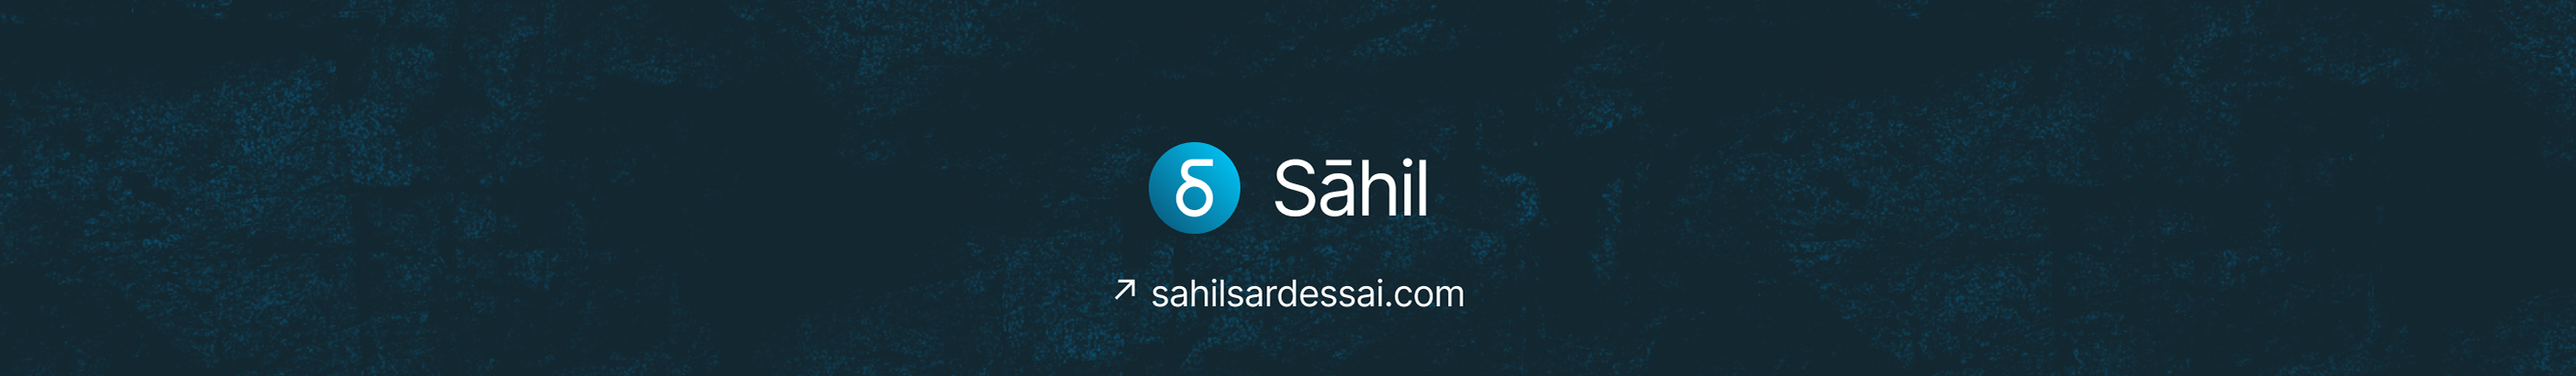 Sahil Sardessai's profile banner